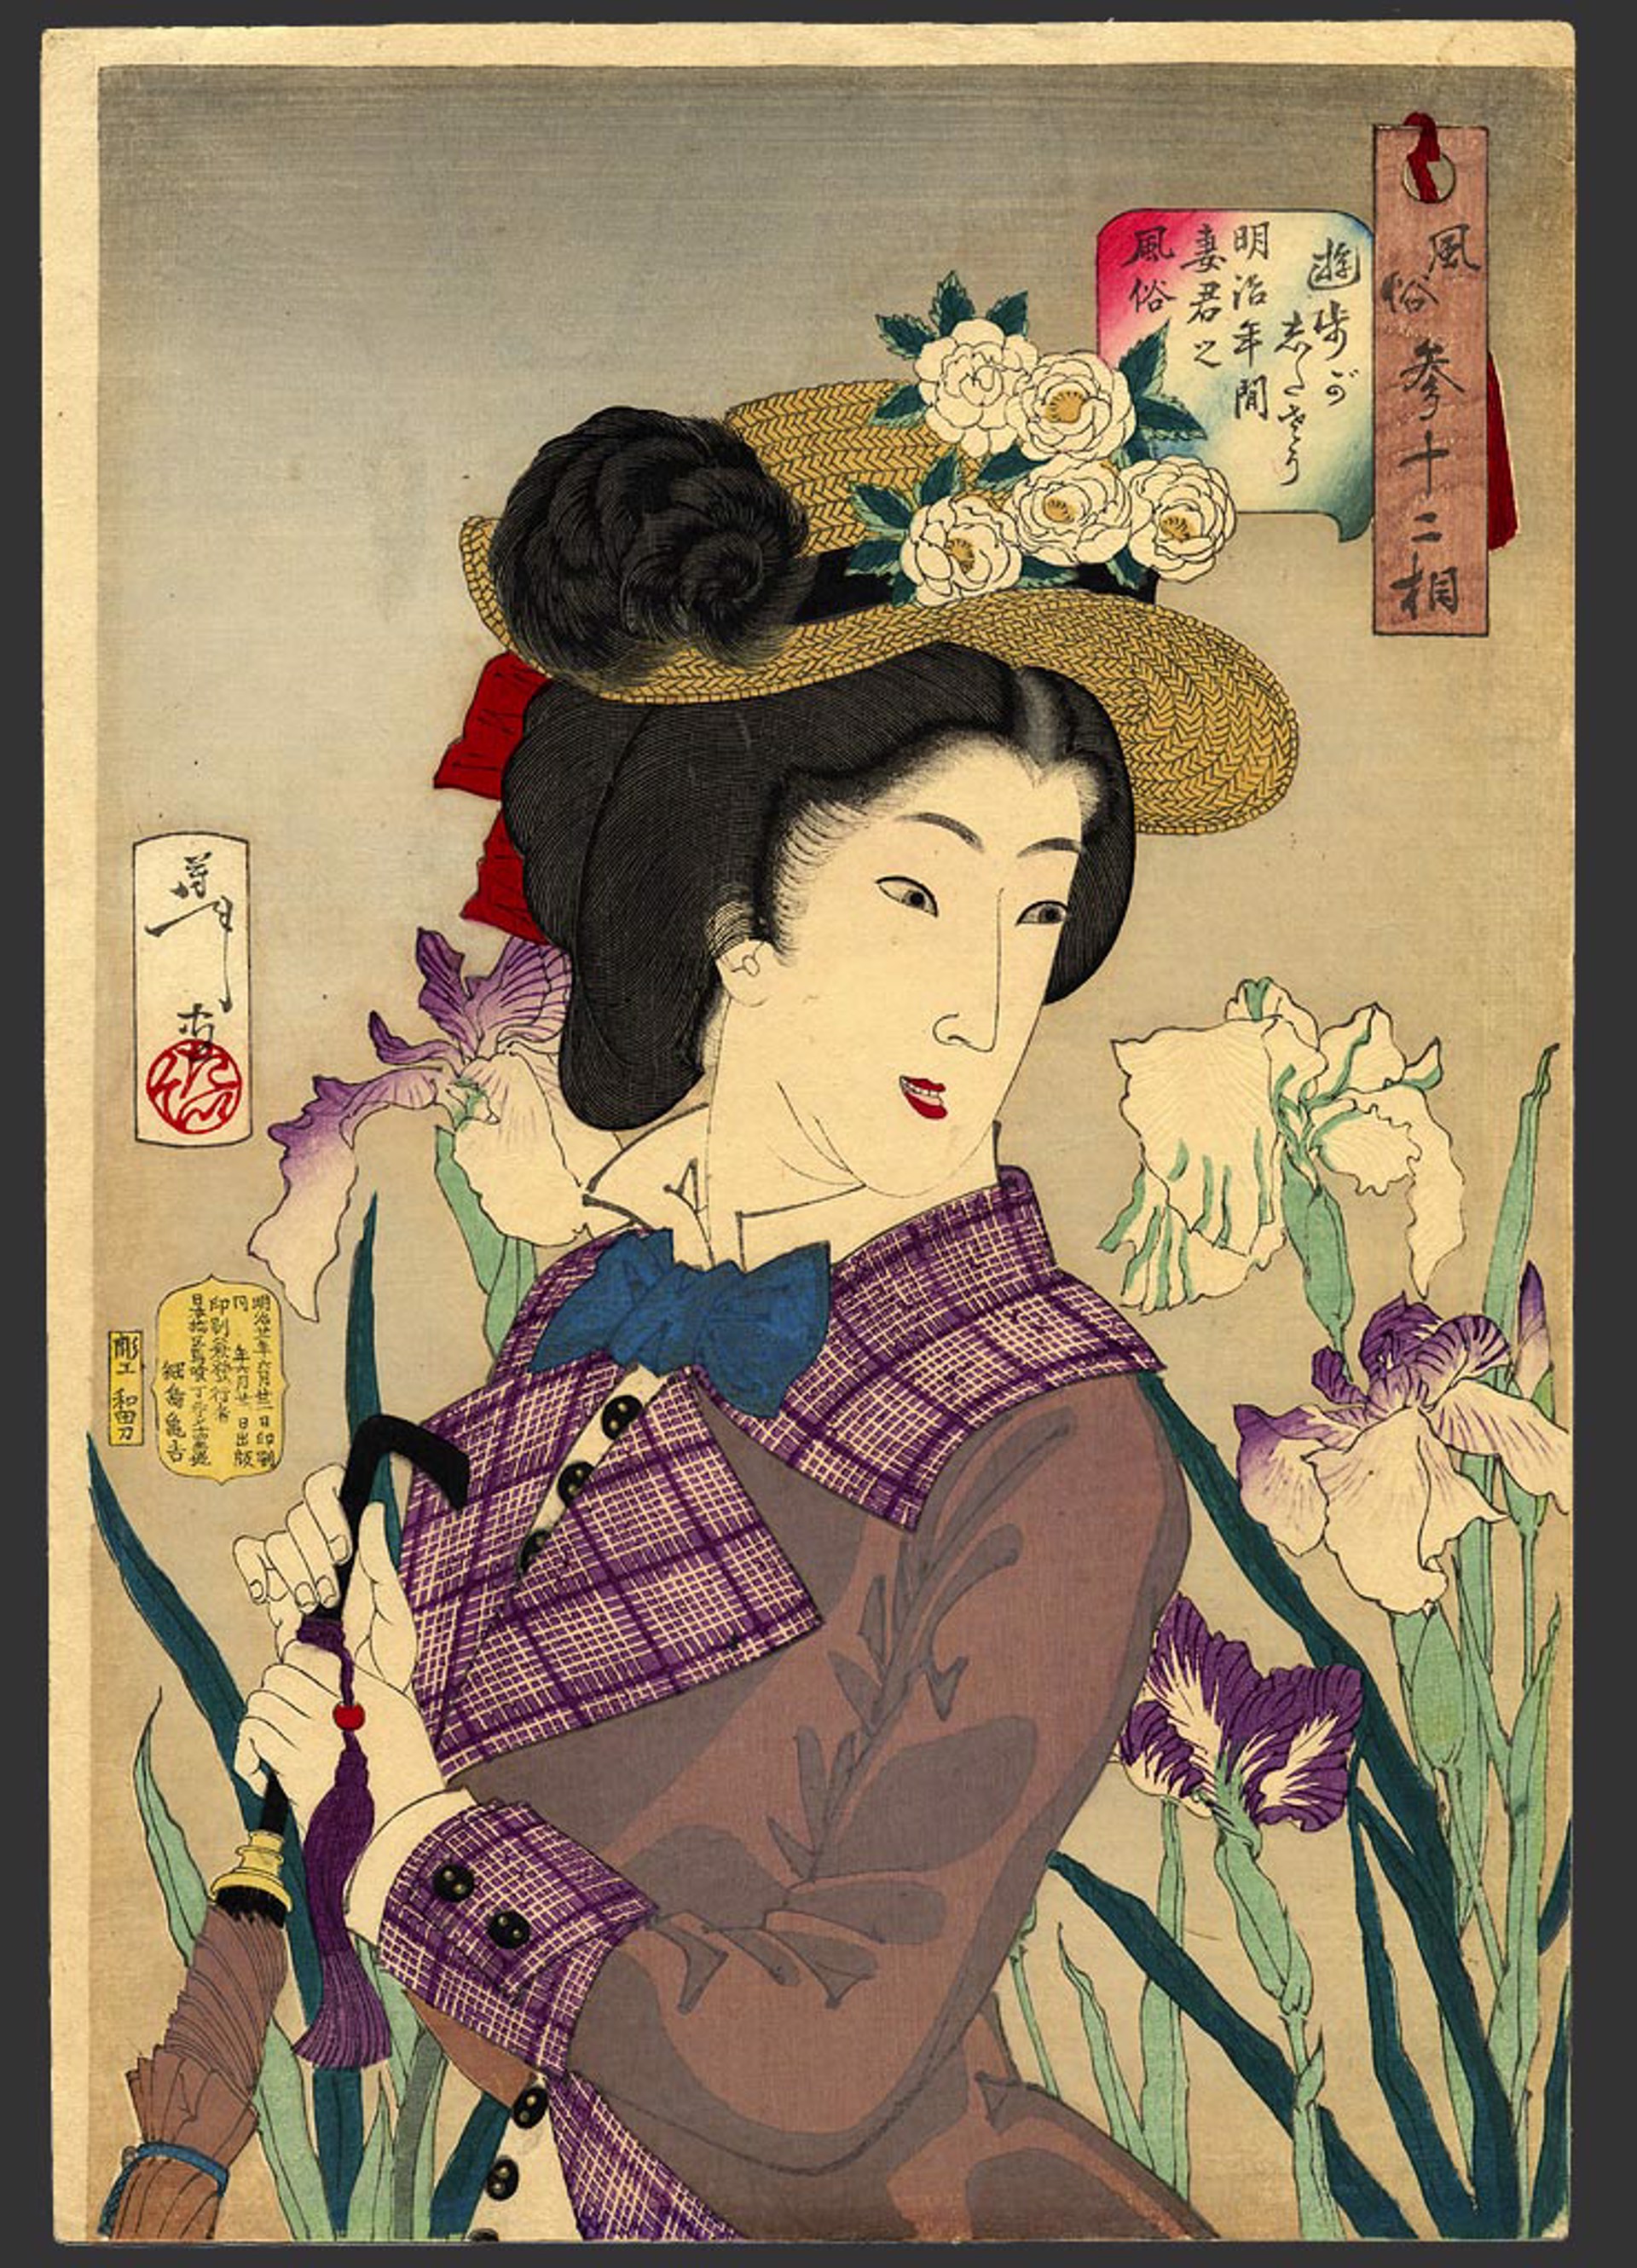 Looking as if she is enjoying a stroll: a lady of the Meiji era 32 Aspects of Women by Yoshitoshi